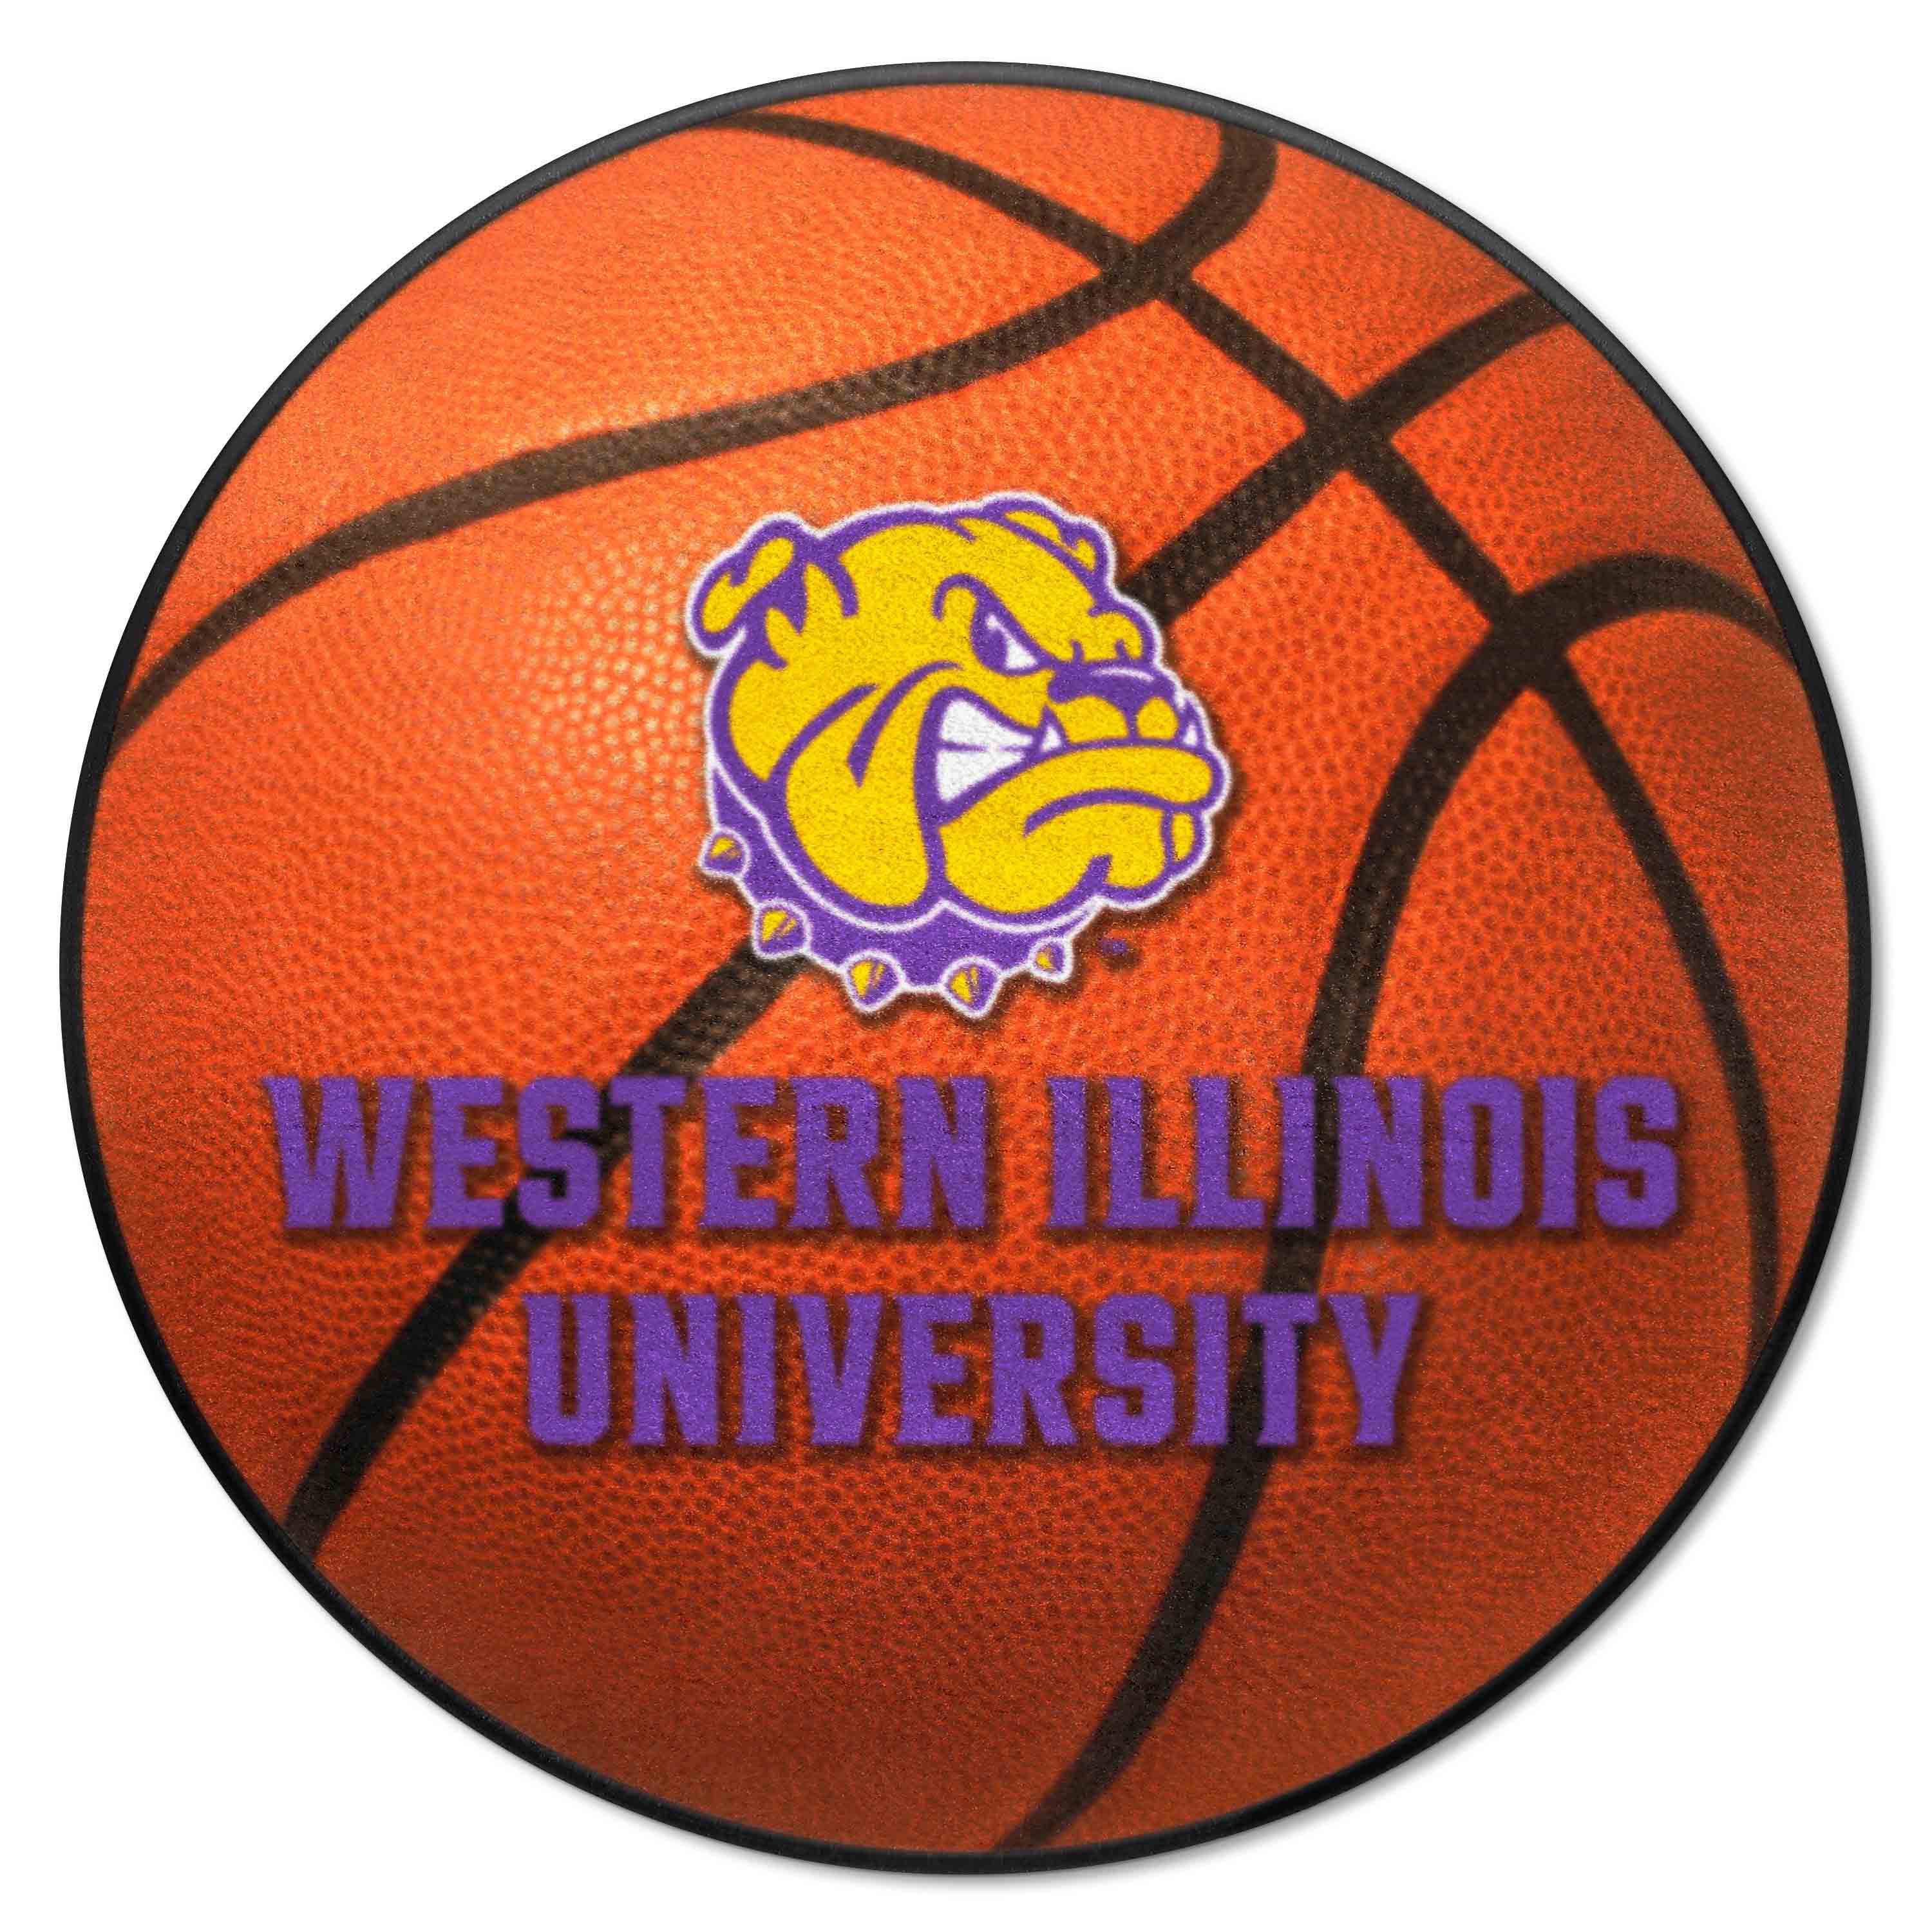 Western Illinois Basketball Mat 27" diameter - image 1 of 2